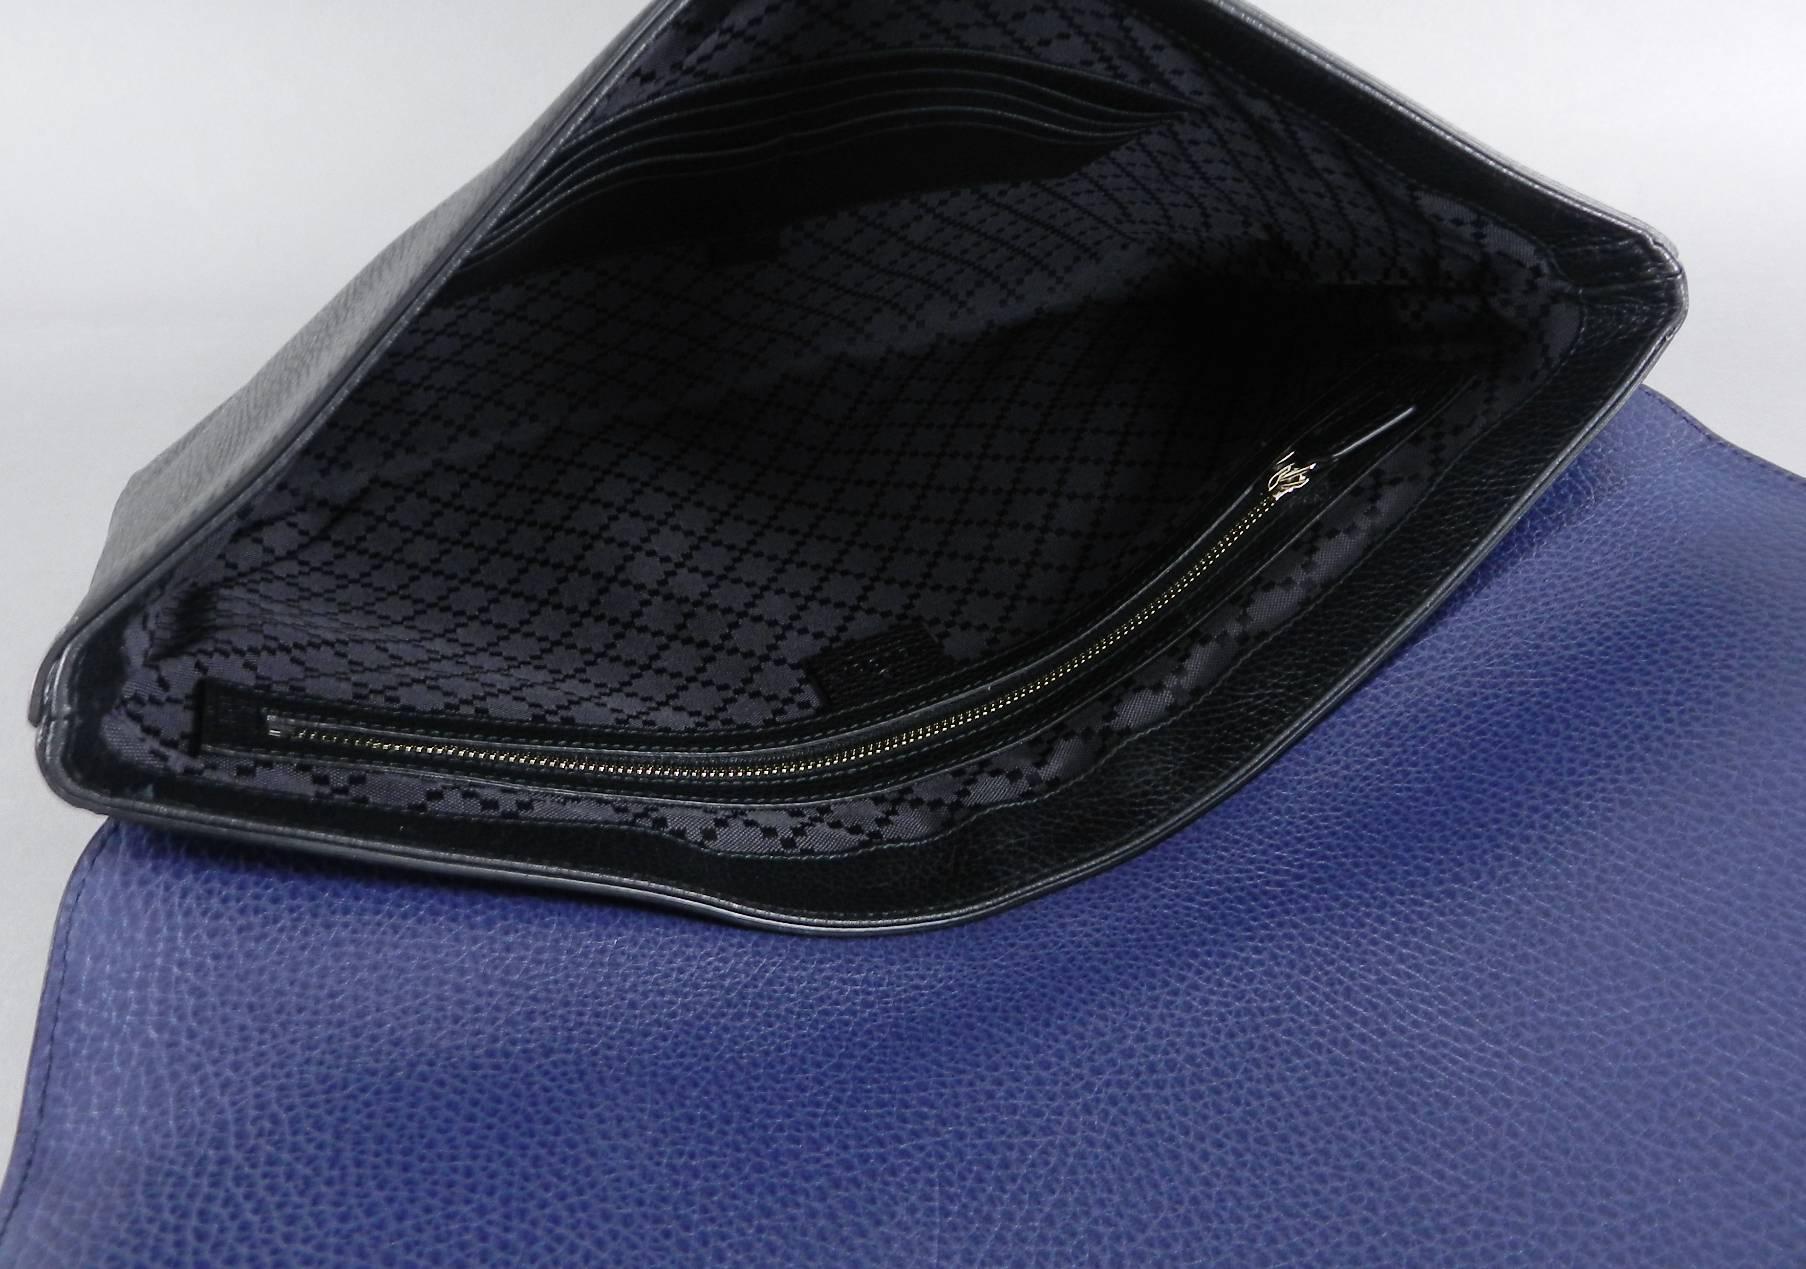 GUCCI Blue and Black Leather Laptop Computer Bag / Portfolio 4